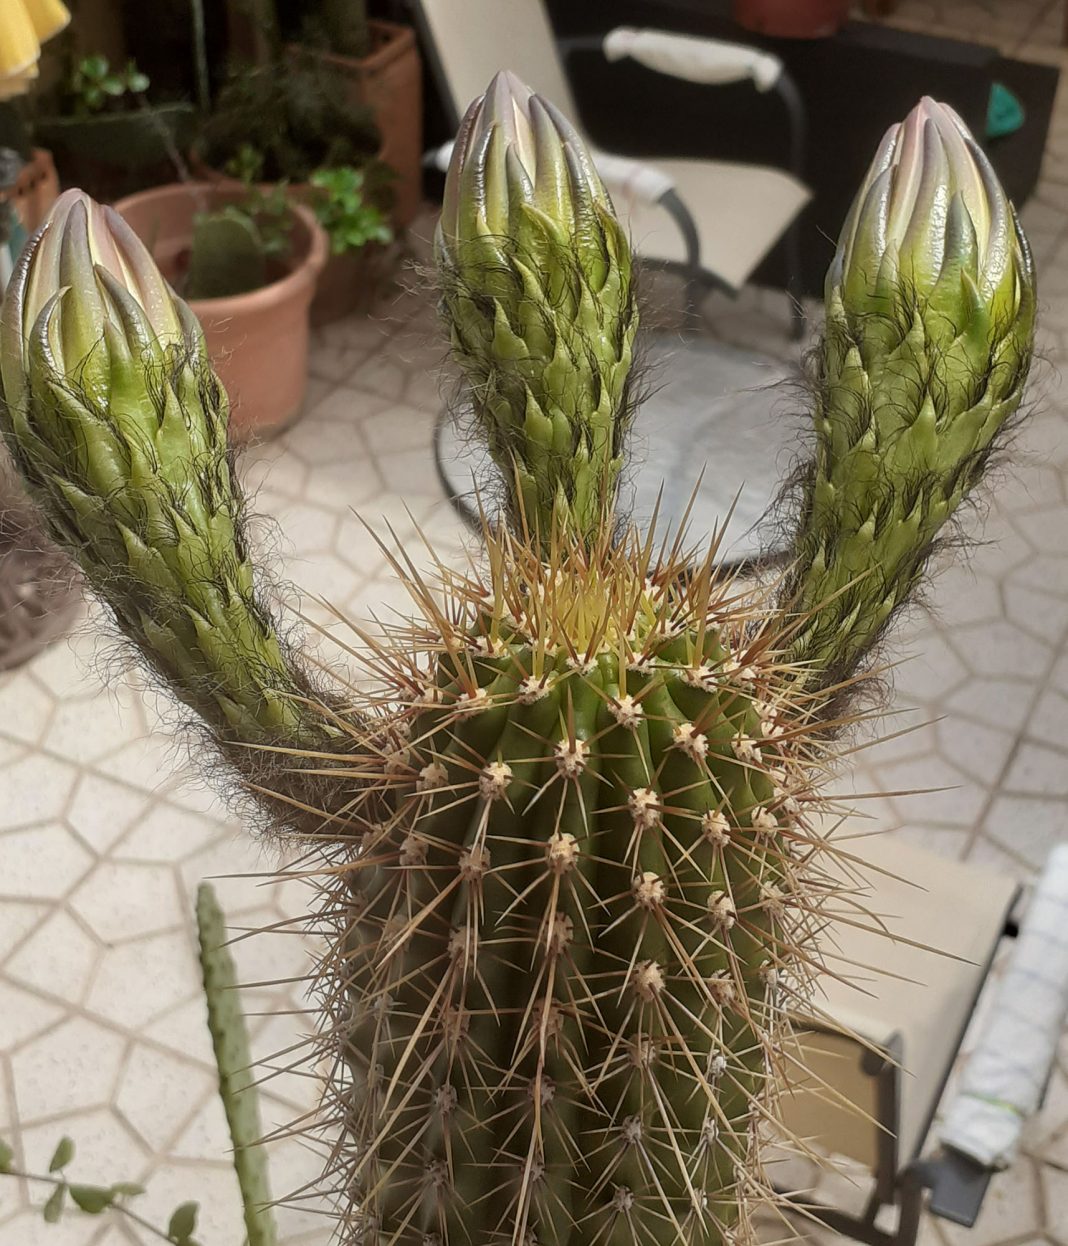 Cactus - Cardón - derived from Spanish cardo 'thistle'